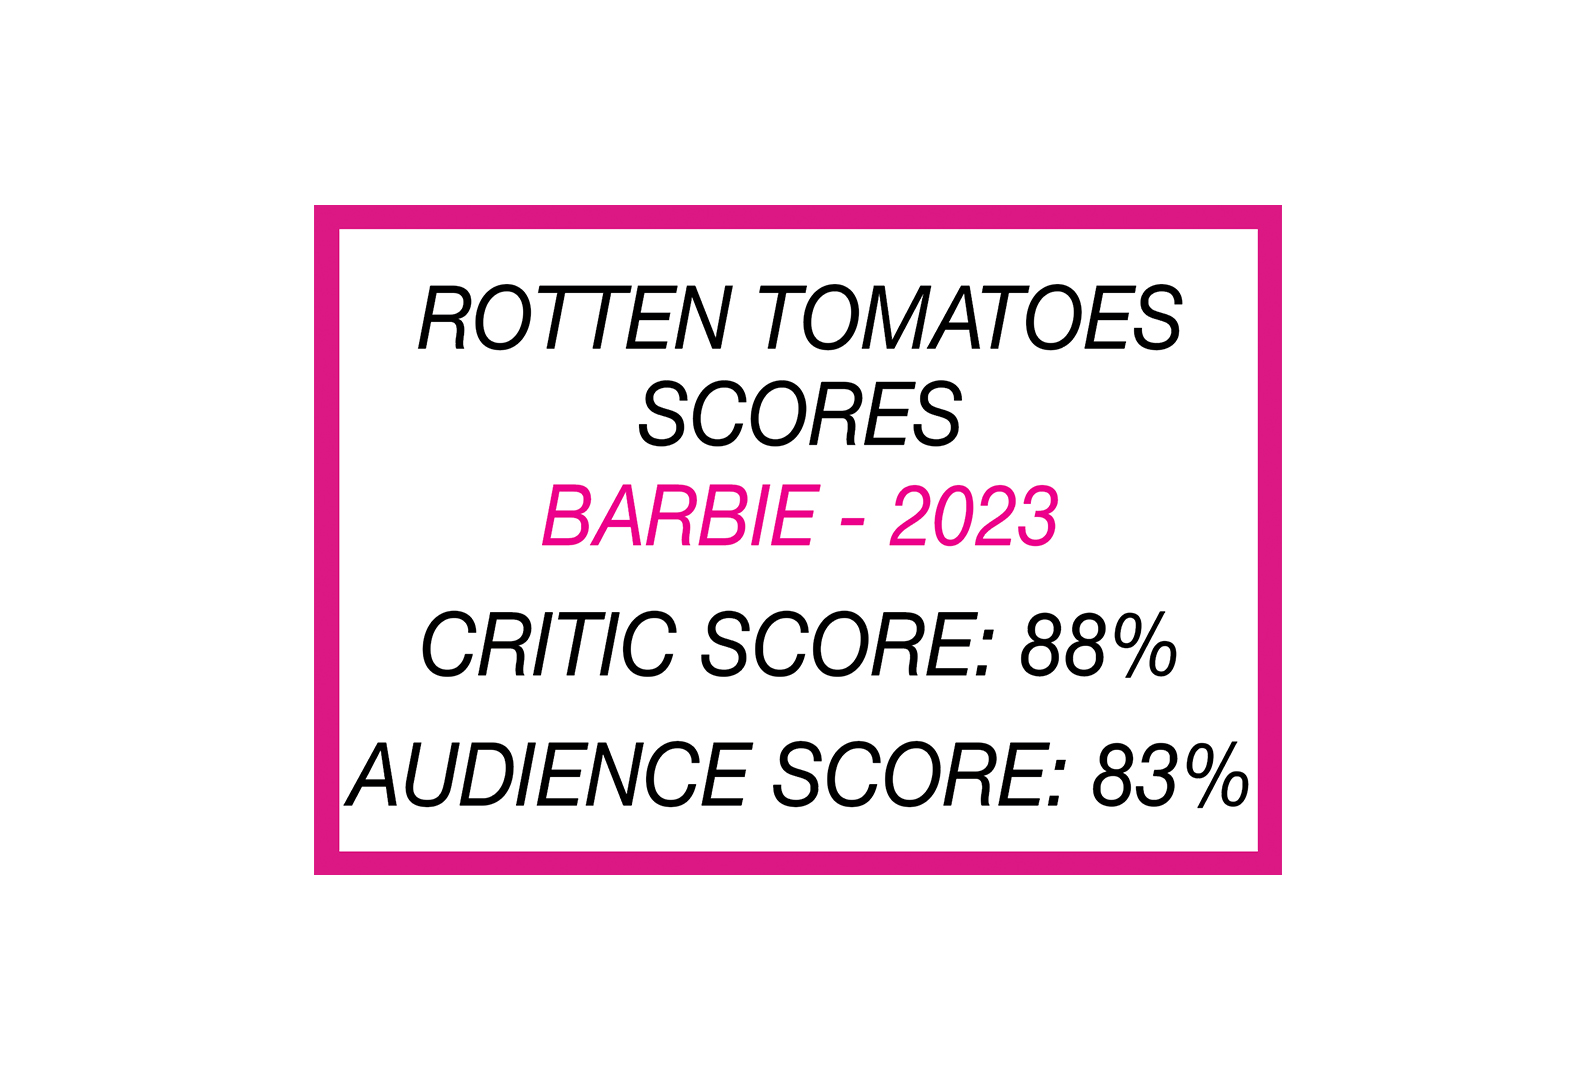 Barbie's impressive Rotten Tomatoes score revealed